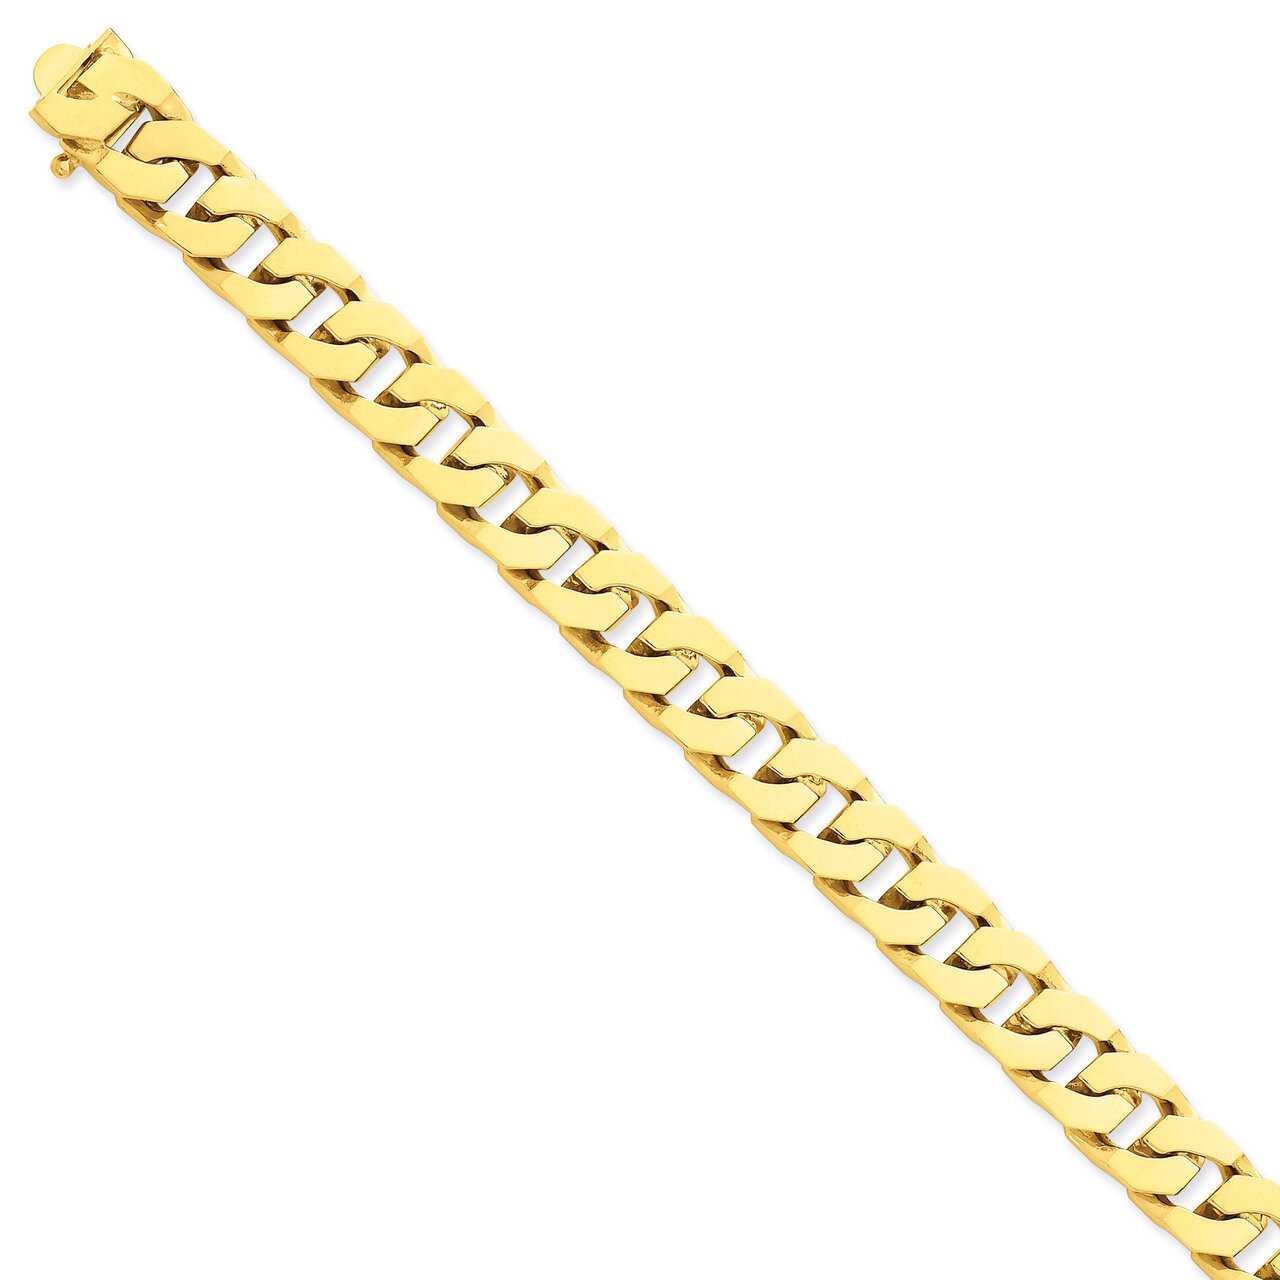 12mm Hand-Polished Fancy Link Chain 24 Inch 14k Gold LK139-24